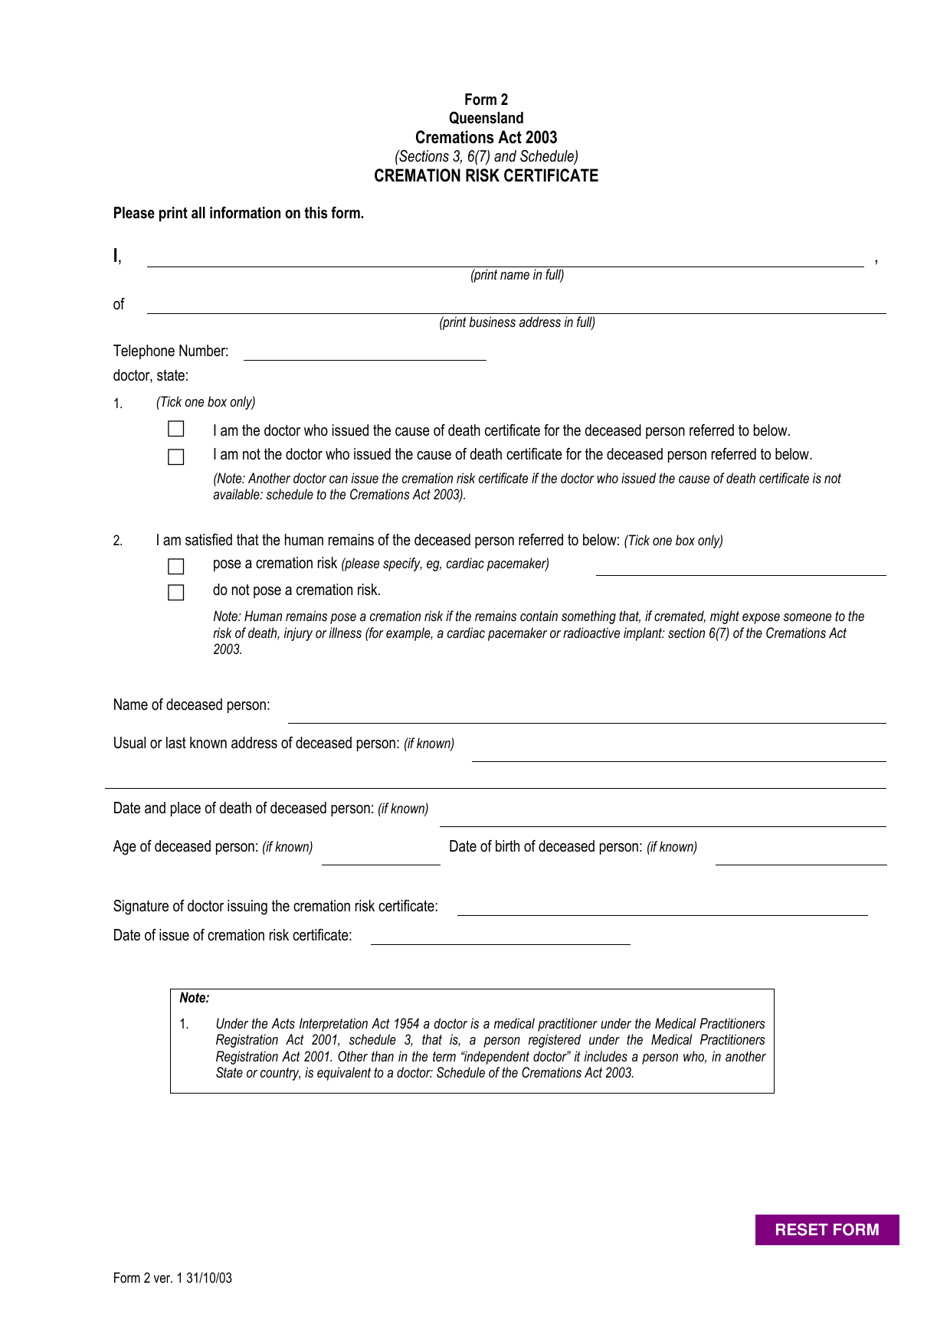 Form 2 Cremation Risk Certificate - Queensland, Australia, Page 1